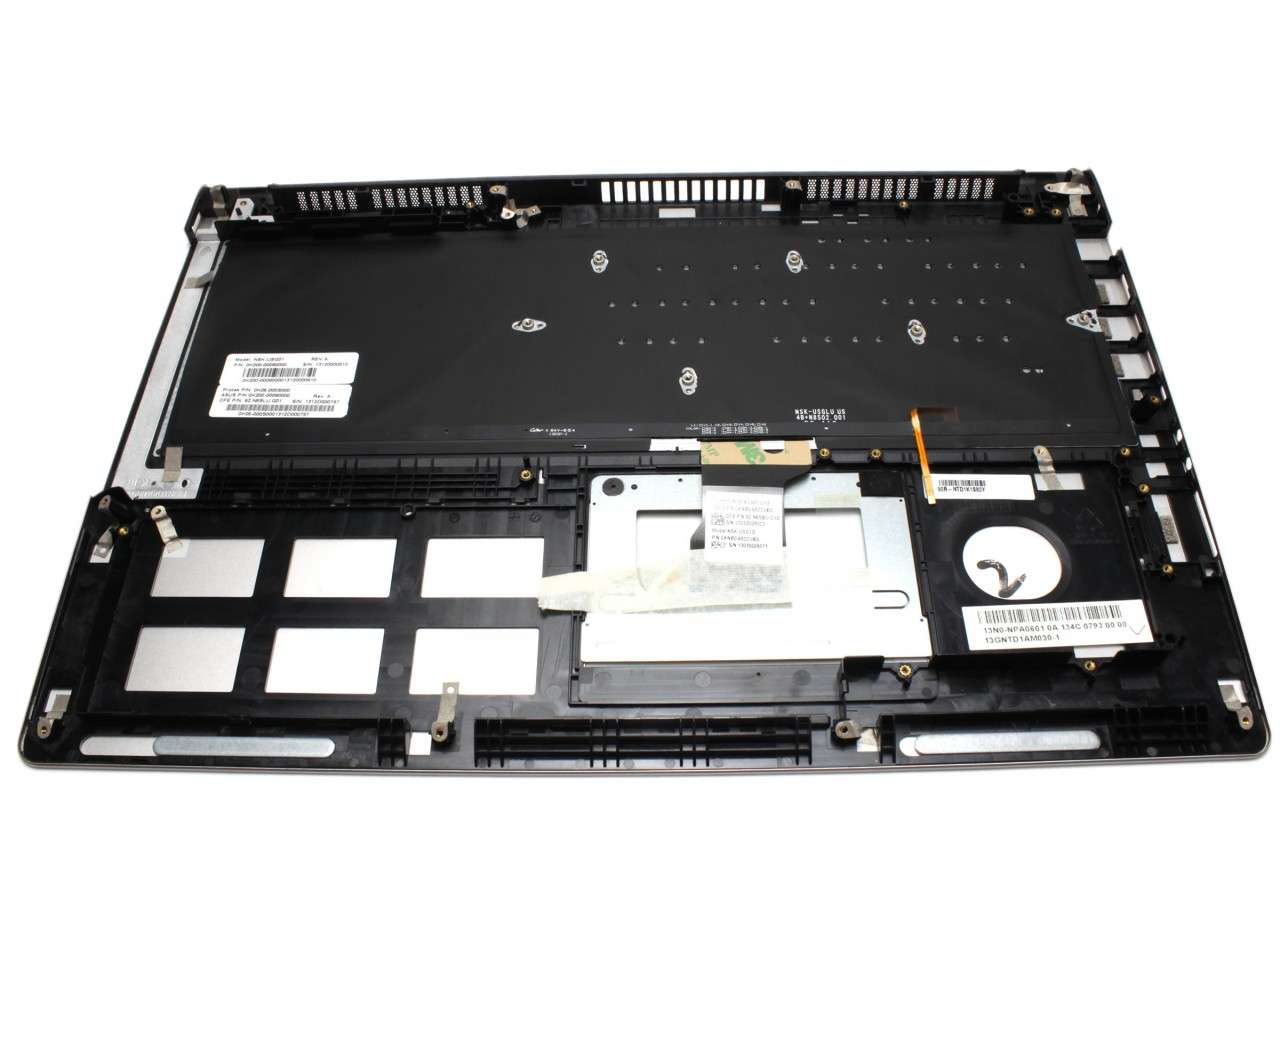 Tastatura Asus 0K05-000S000 neagra cu Palmrest argintiu iluminata backlit